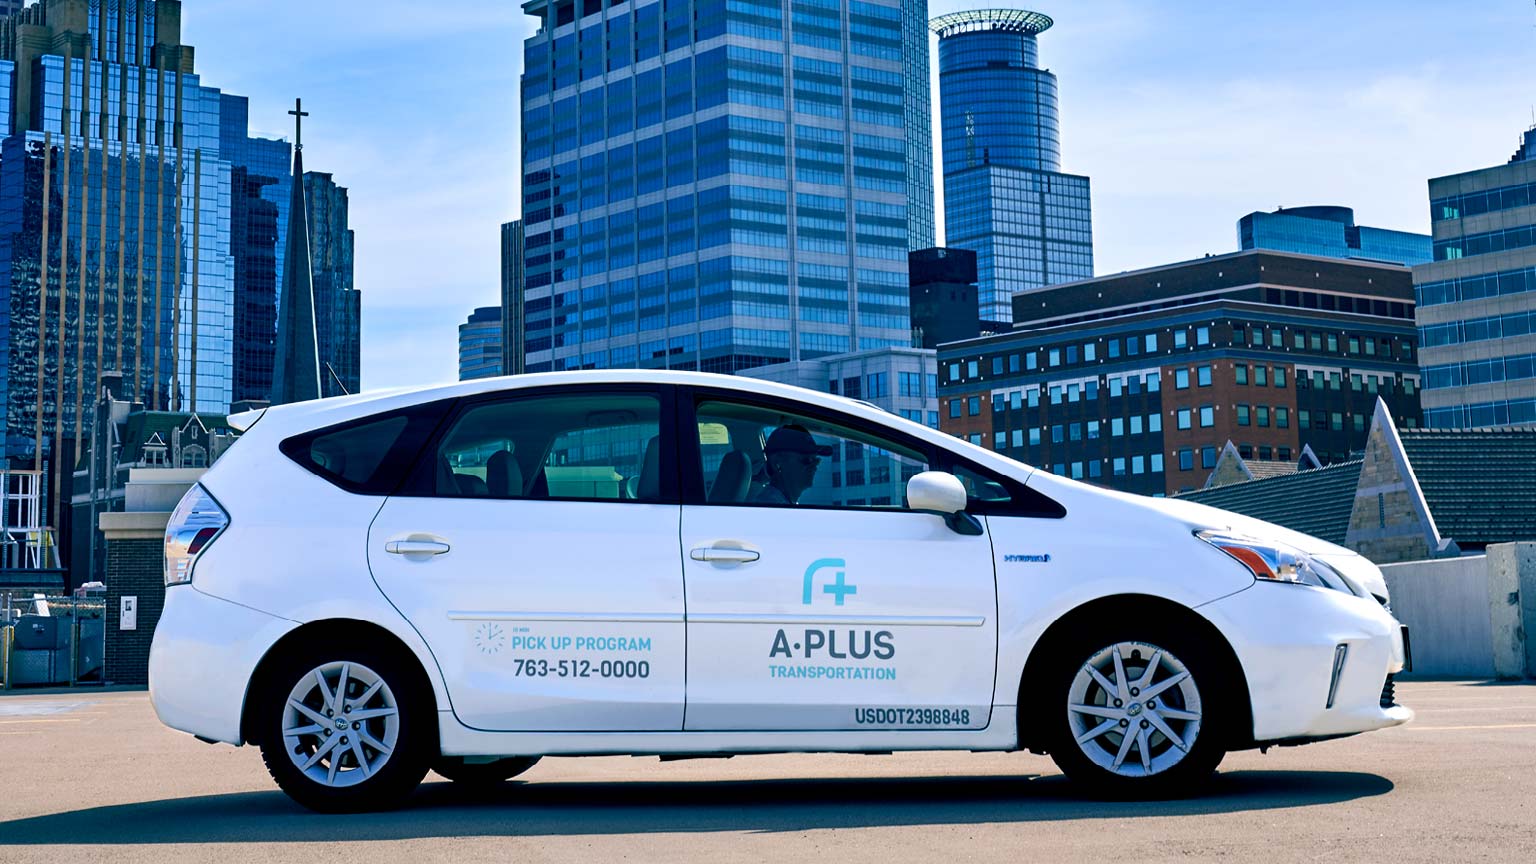 A-Plus Transportation vehicle graphics.